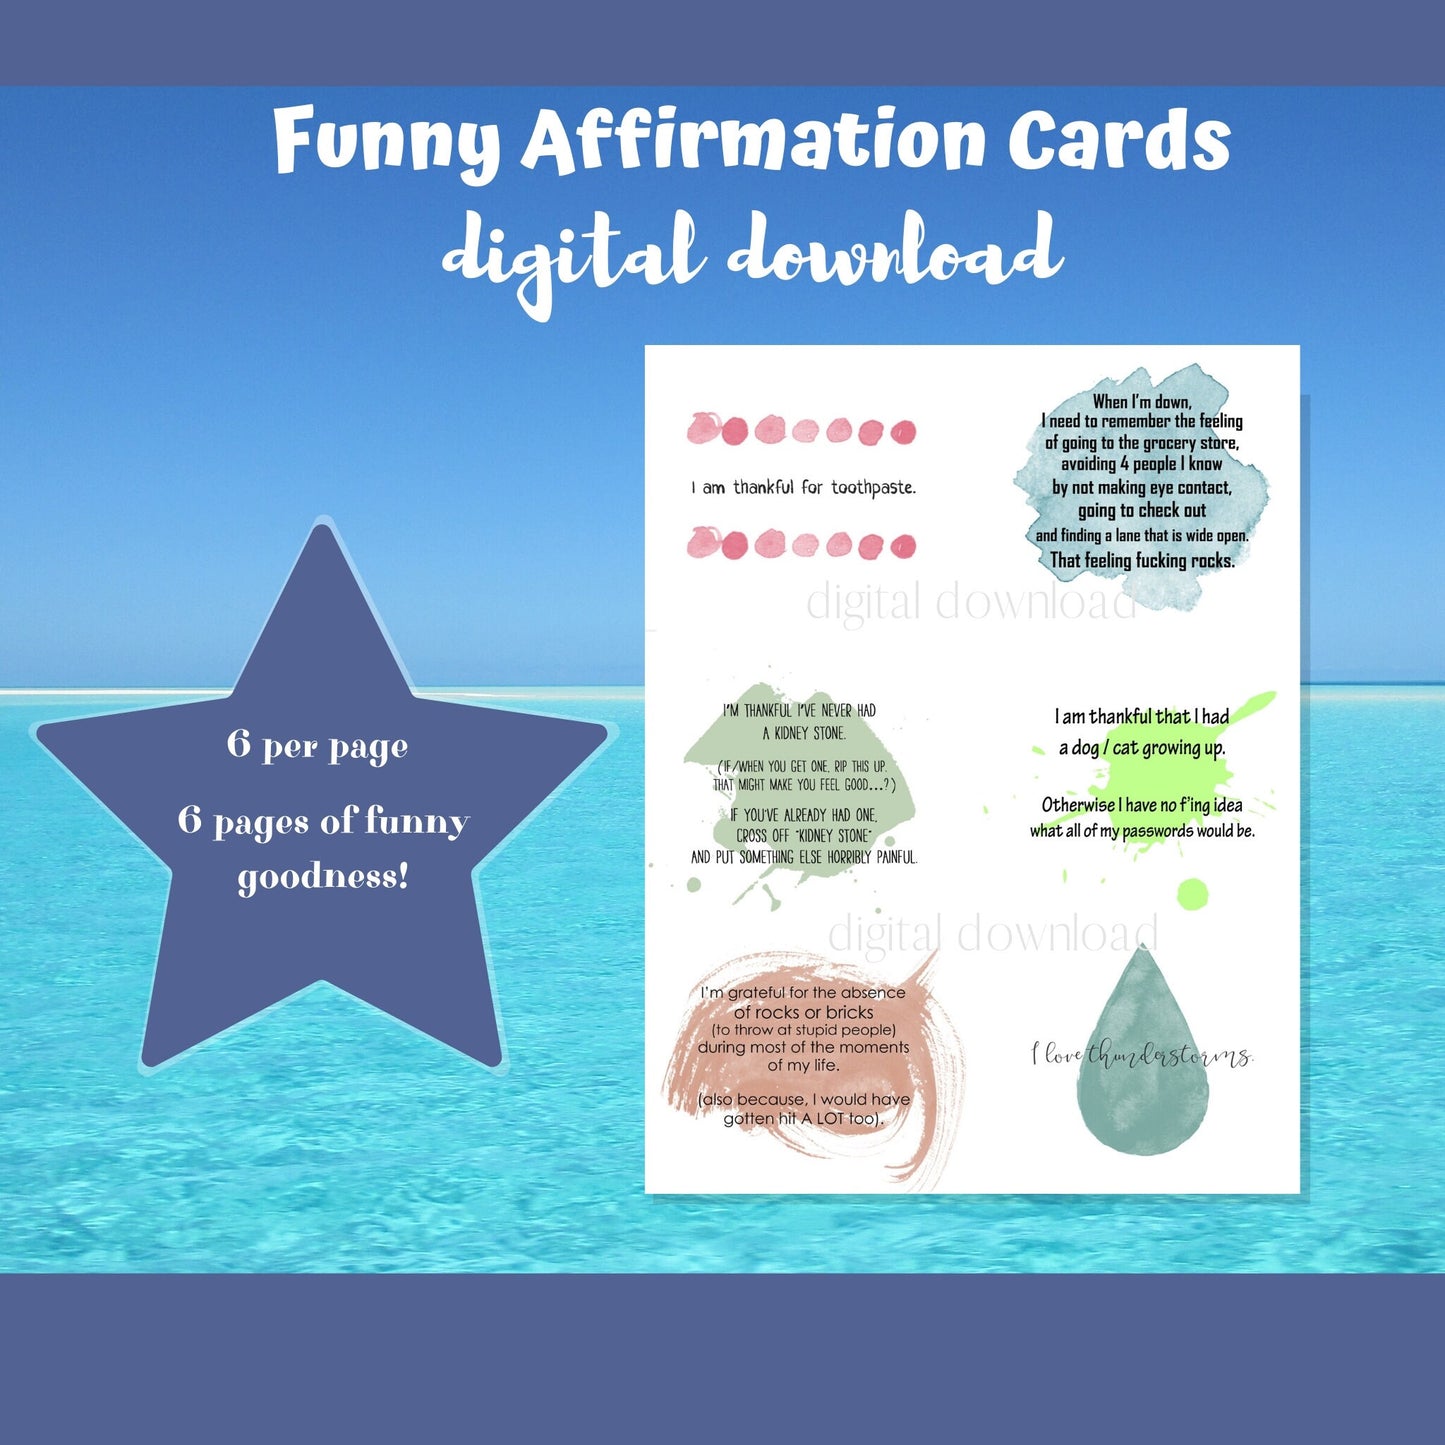 Affirmation Gratitude Cards | Funny Digital Download Instant Printable | Mood / Vision Board, Gift for Women, Best Friend Cards, Sarcastic